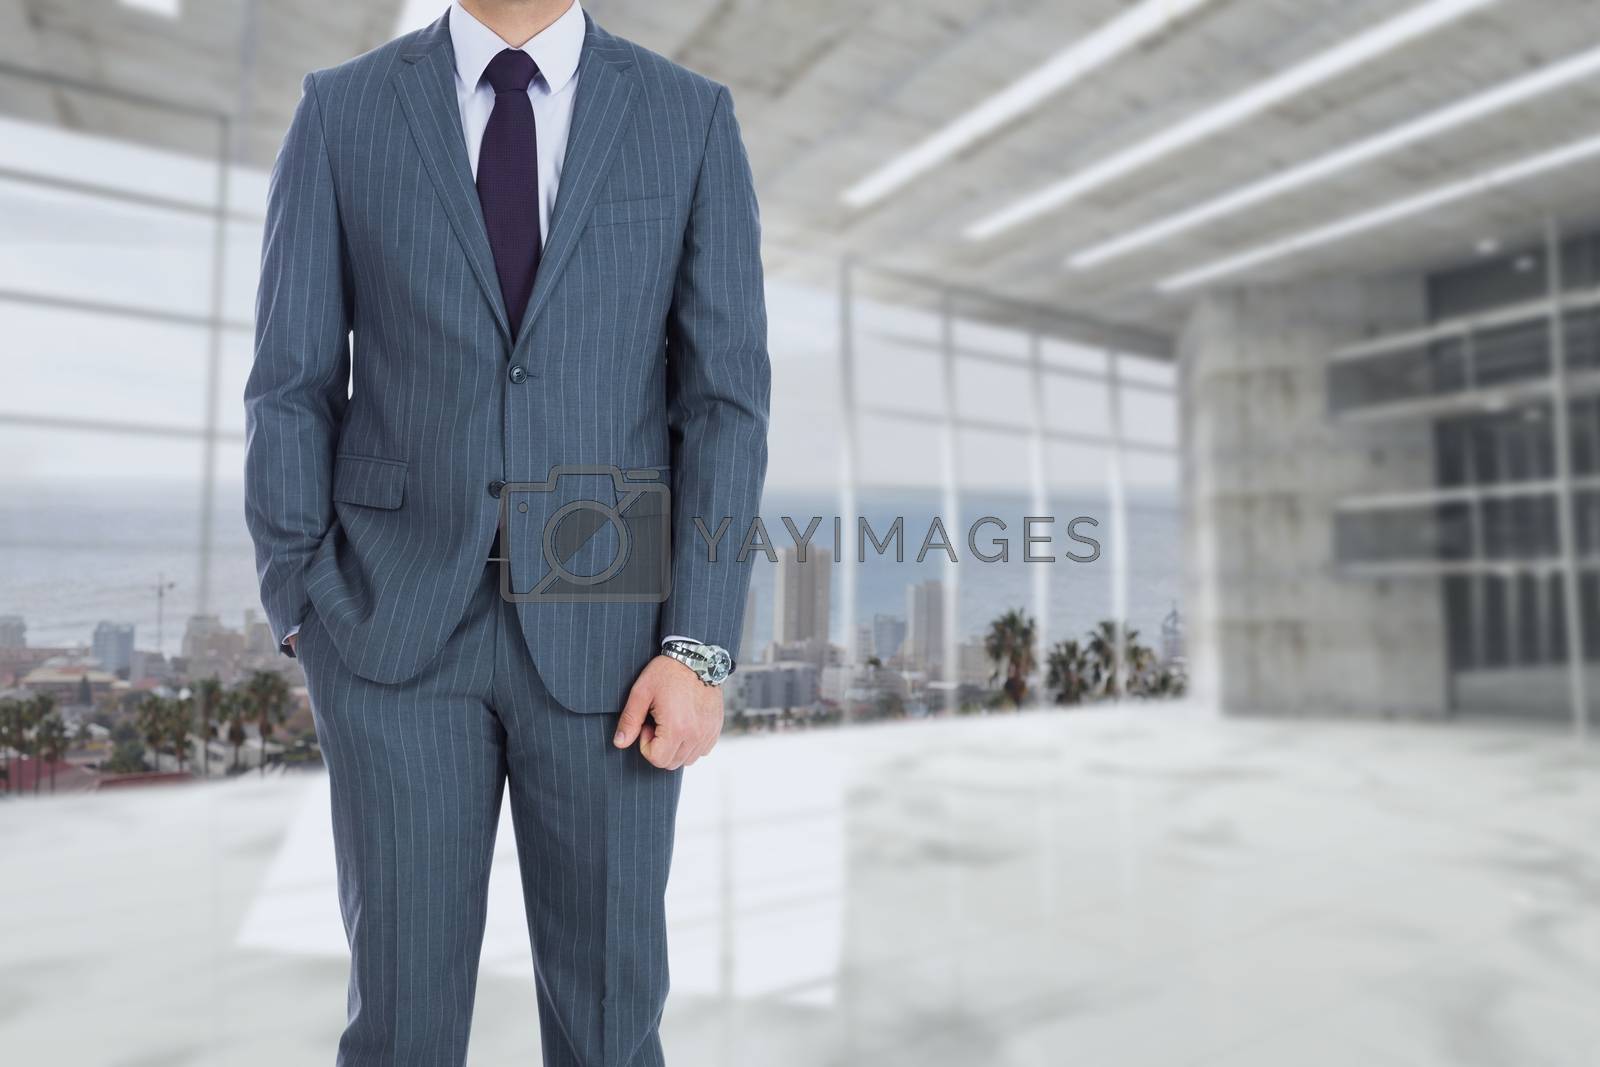 Royalty free image of business torso 19 by Wavebreakmedia